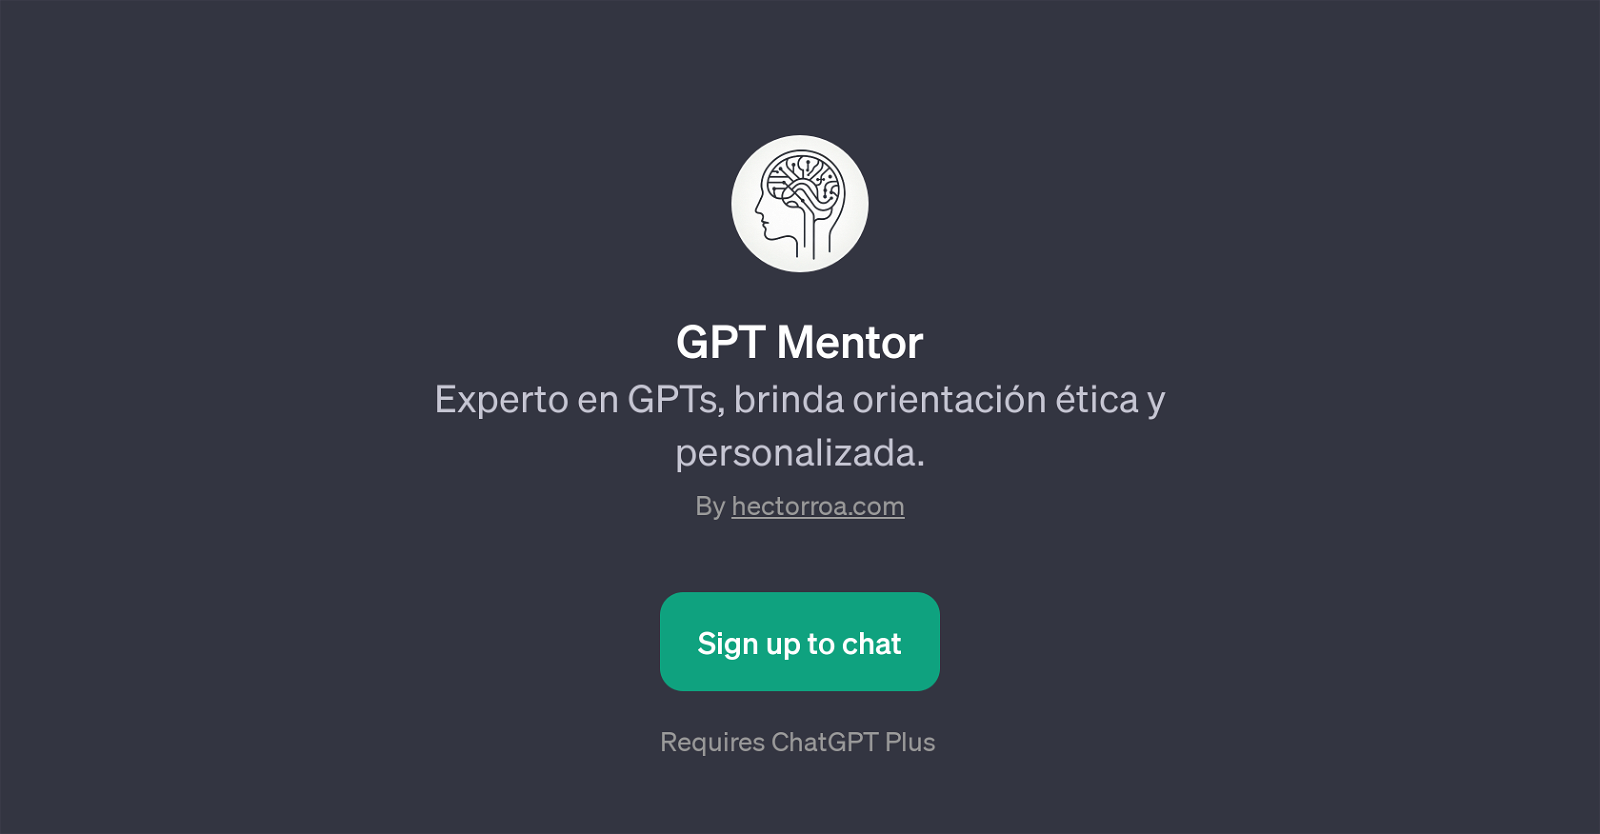 GPT Mentor website